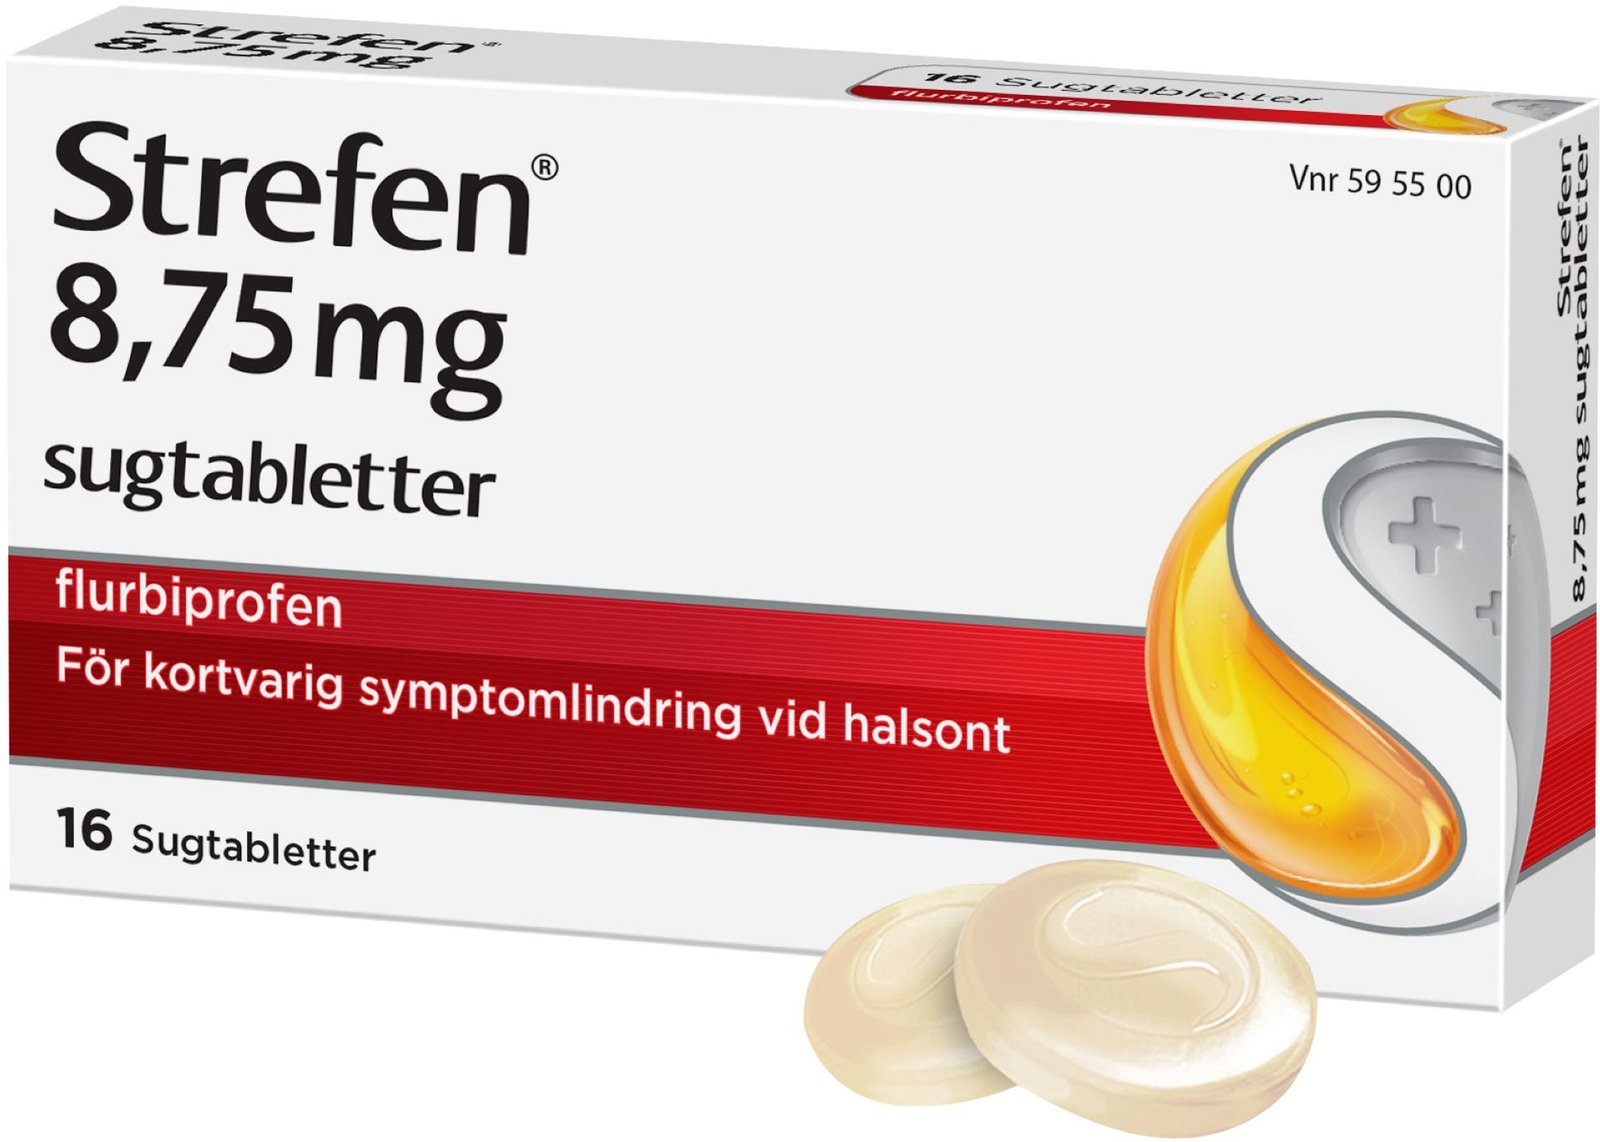 Strefen 8,75 mg flurbiprofen 16 sugtabletter